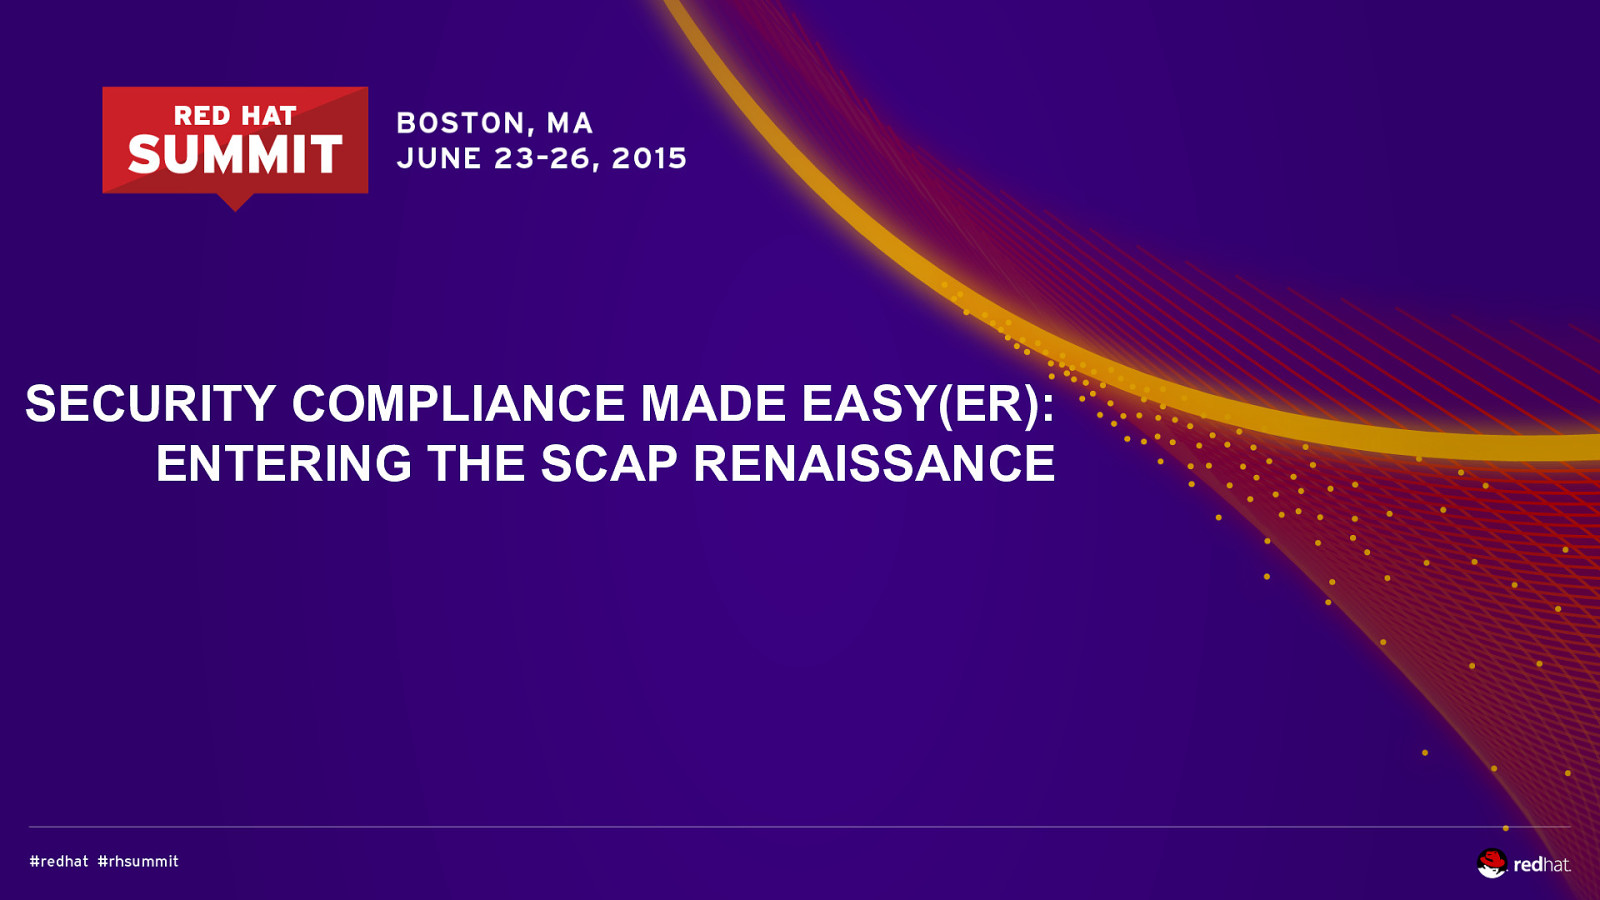 Security Compliance Made Easy(er): Entering the SCAP Renaissance